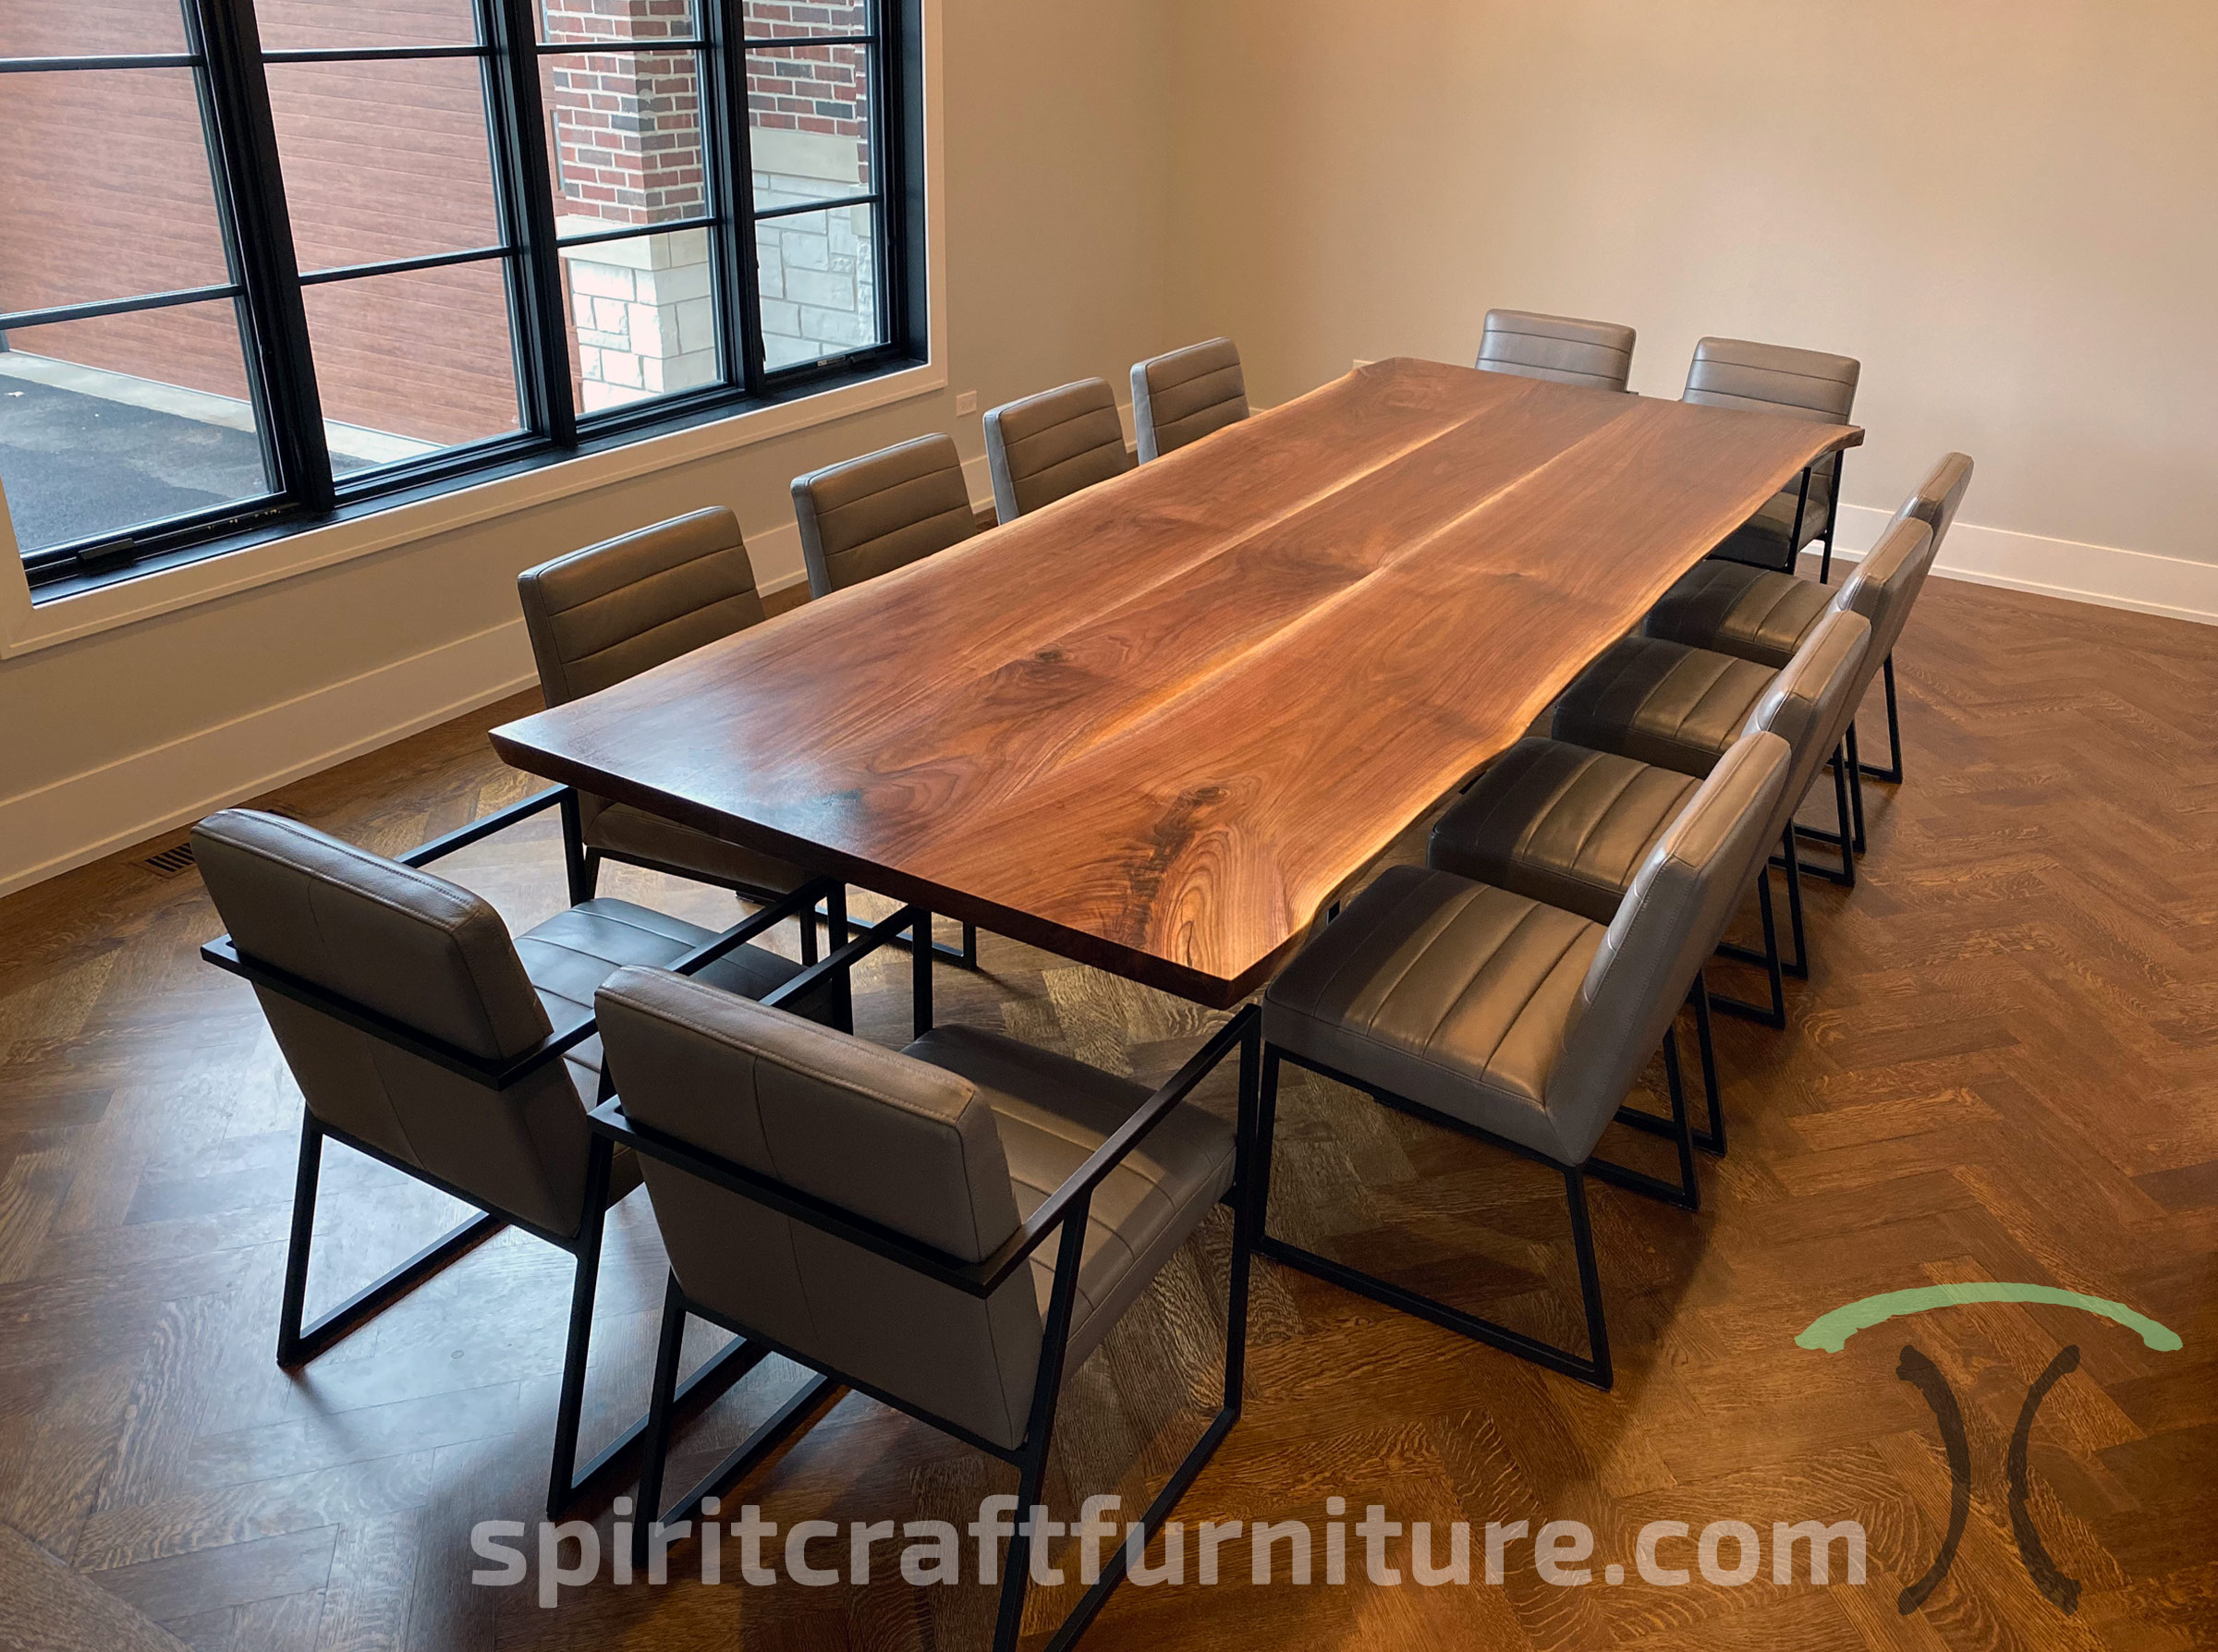 extend Inspire Digital Custom solid wood table tops - live edge slab tables